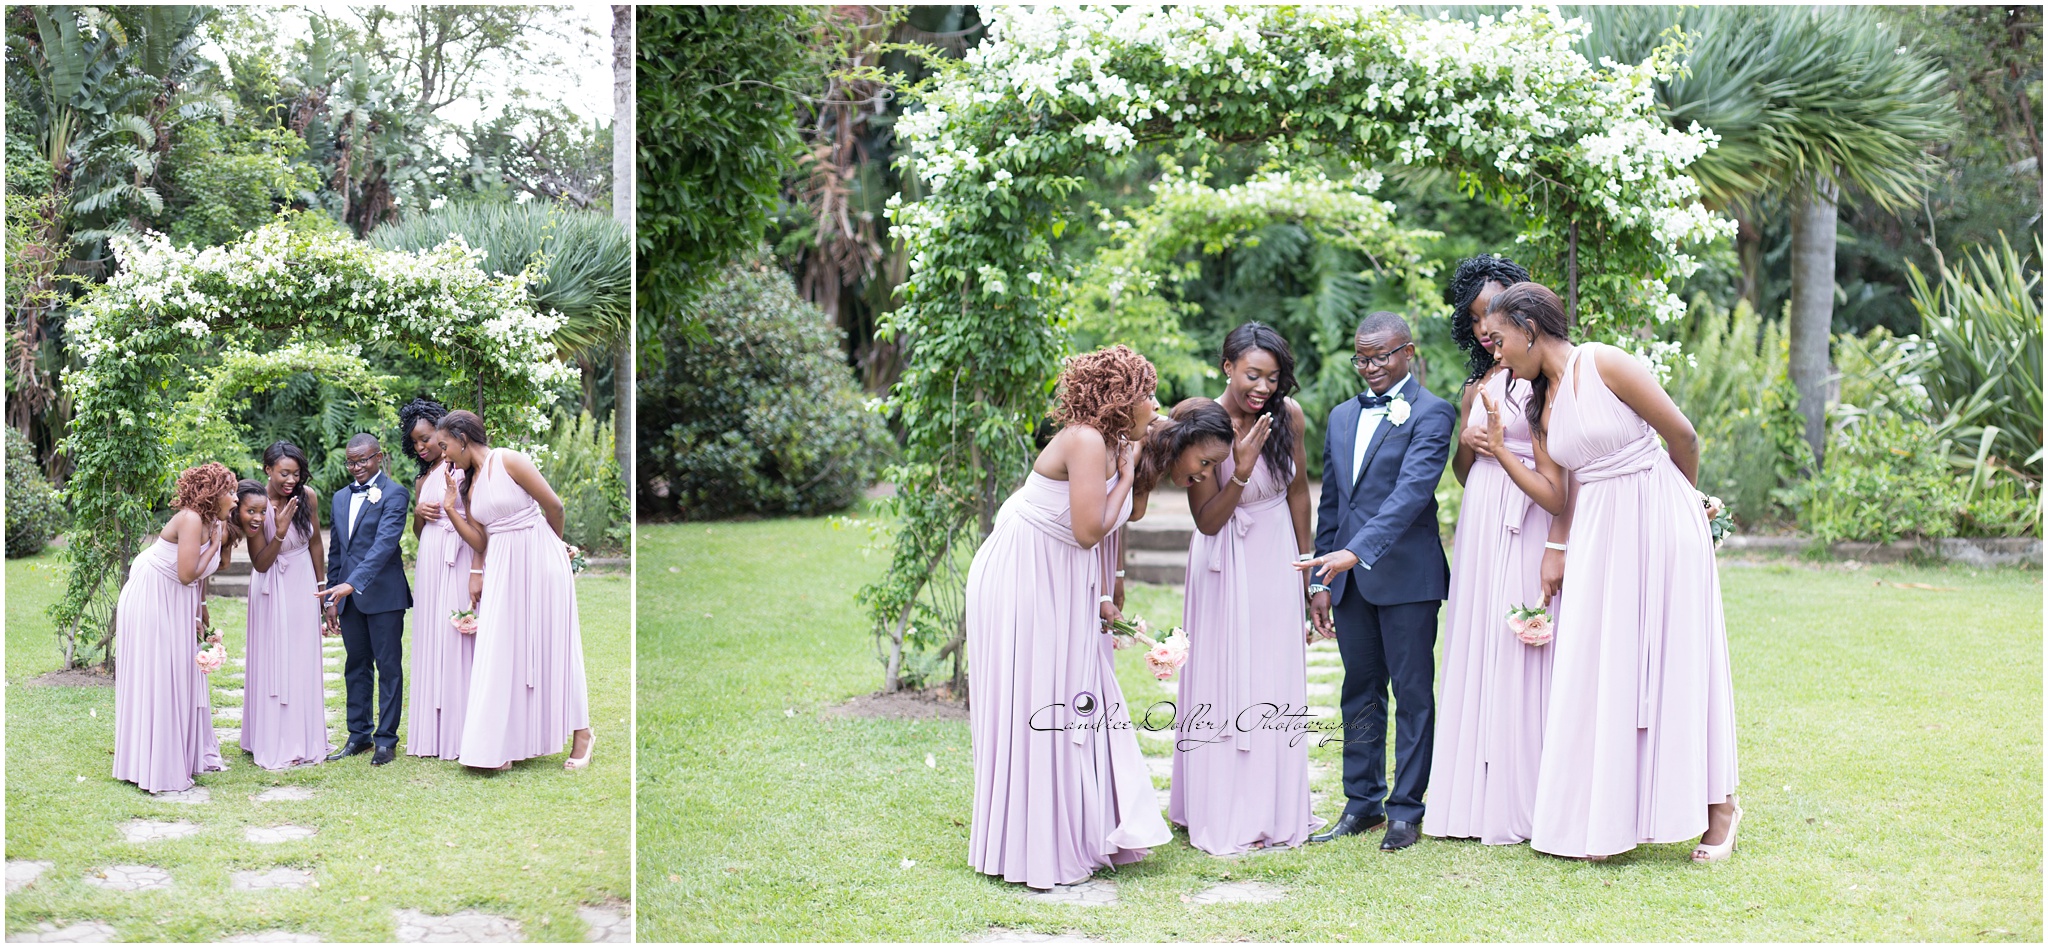 Reuben & Antoinette's Wedding - Candice Dollery Photography_7898